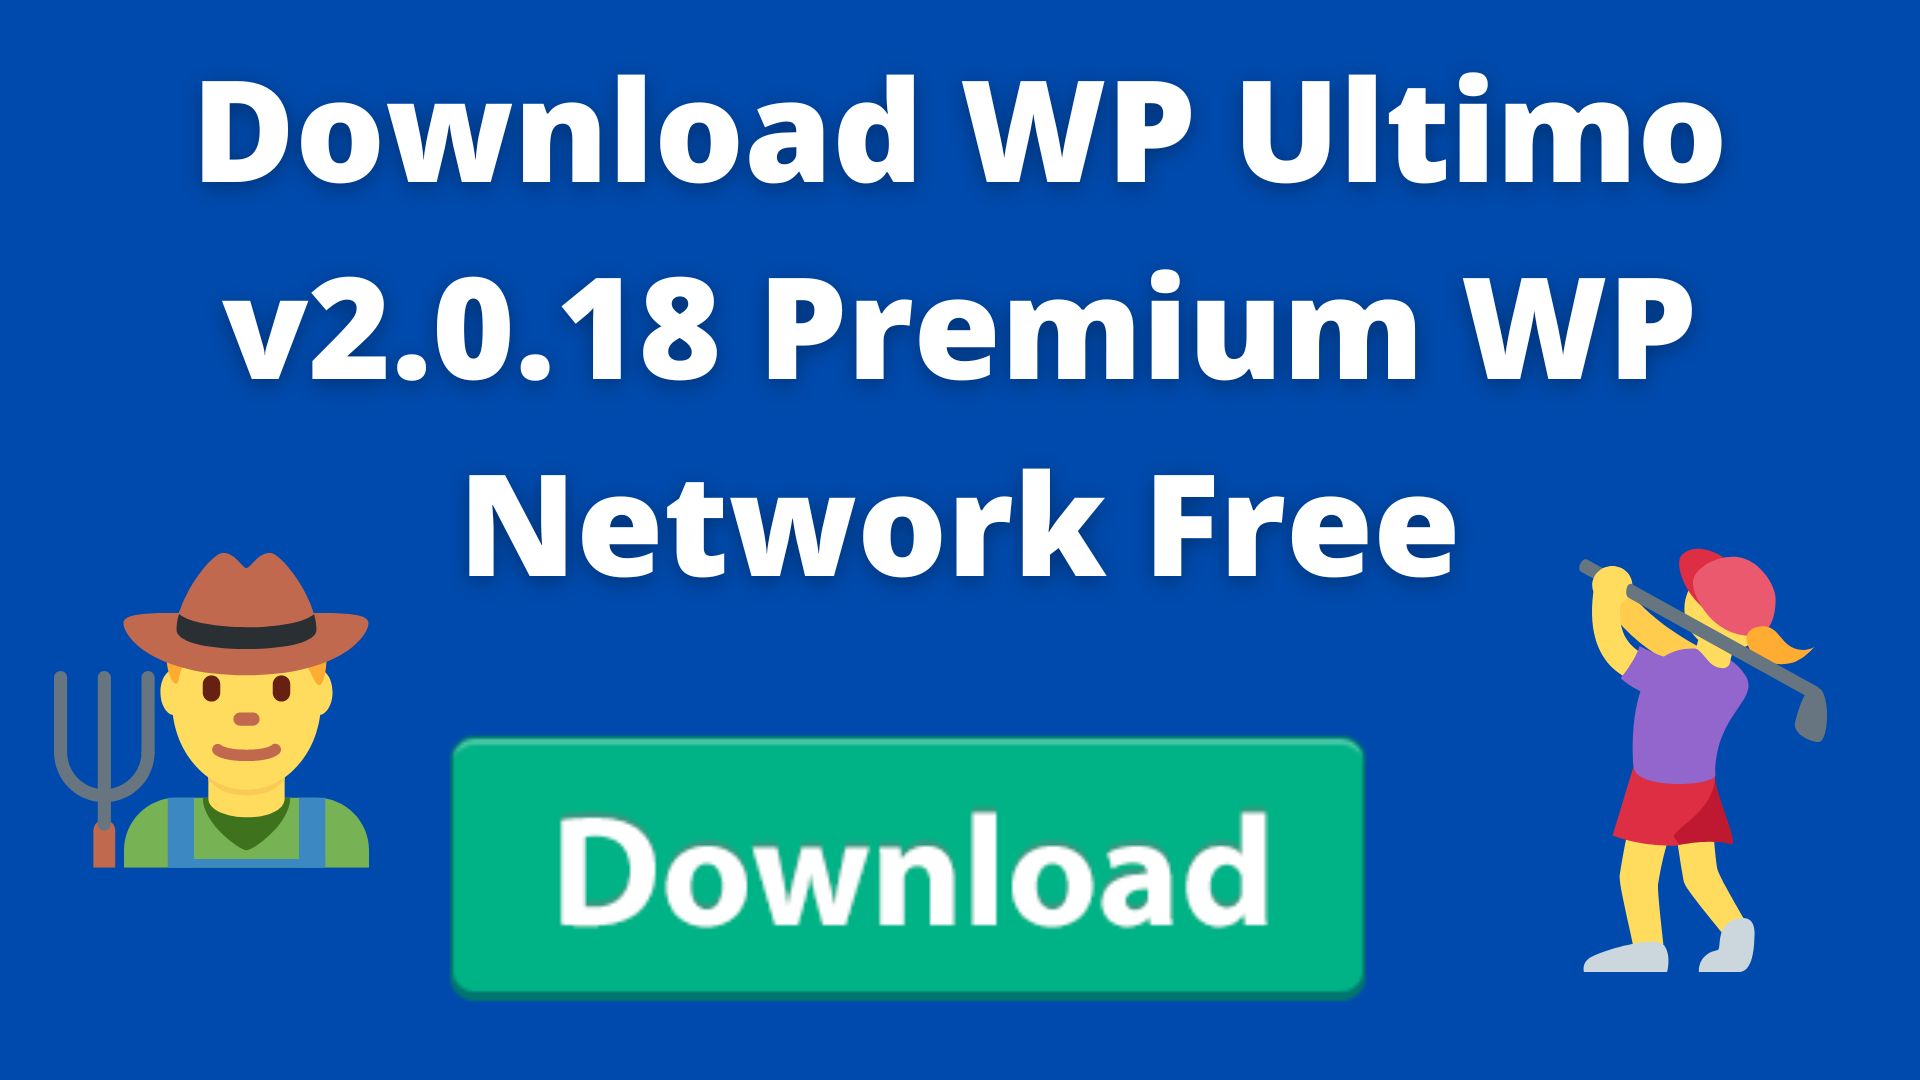 Download wp ultimo v2. 0. 18 premium wp network free